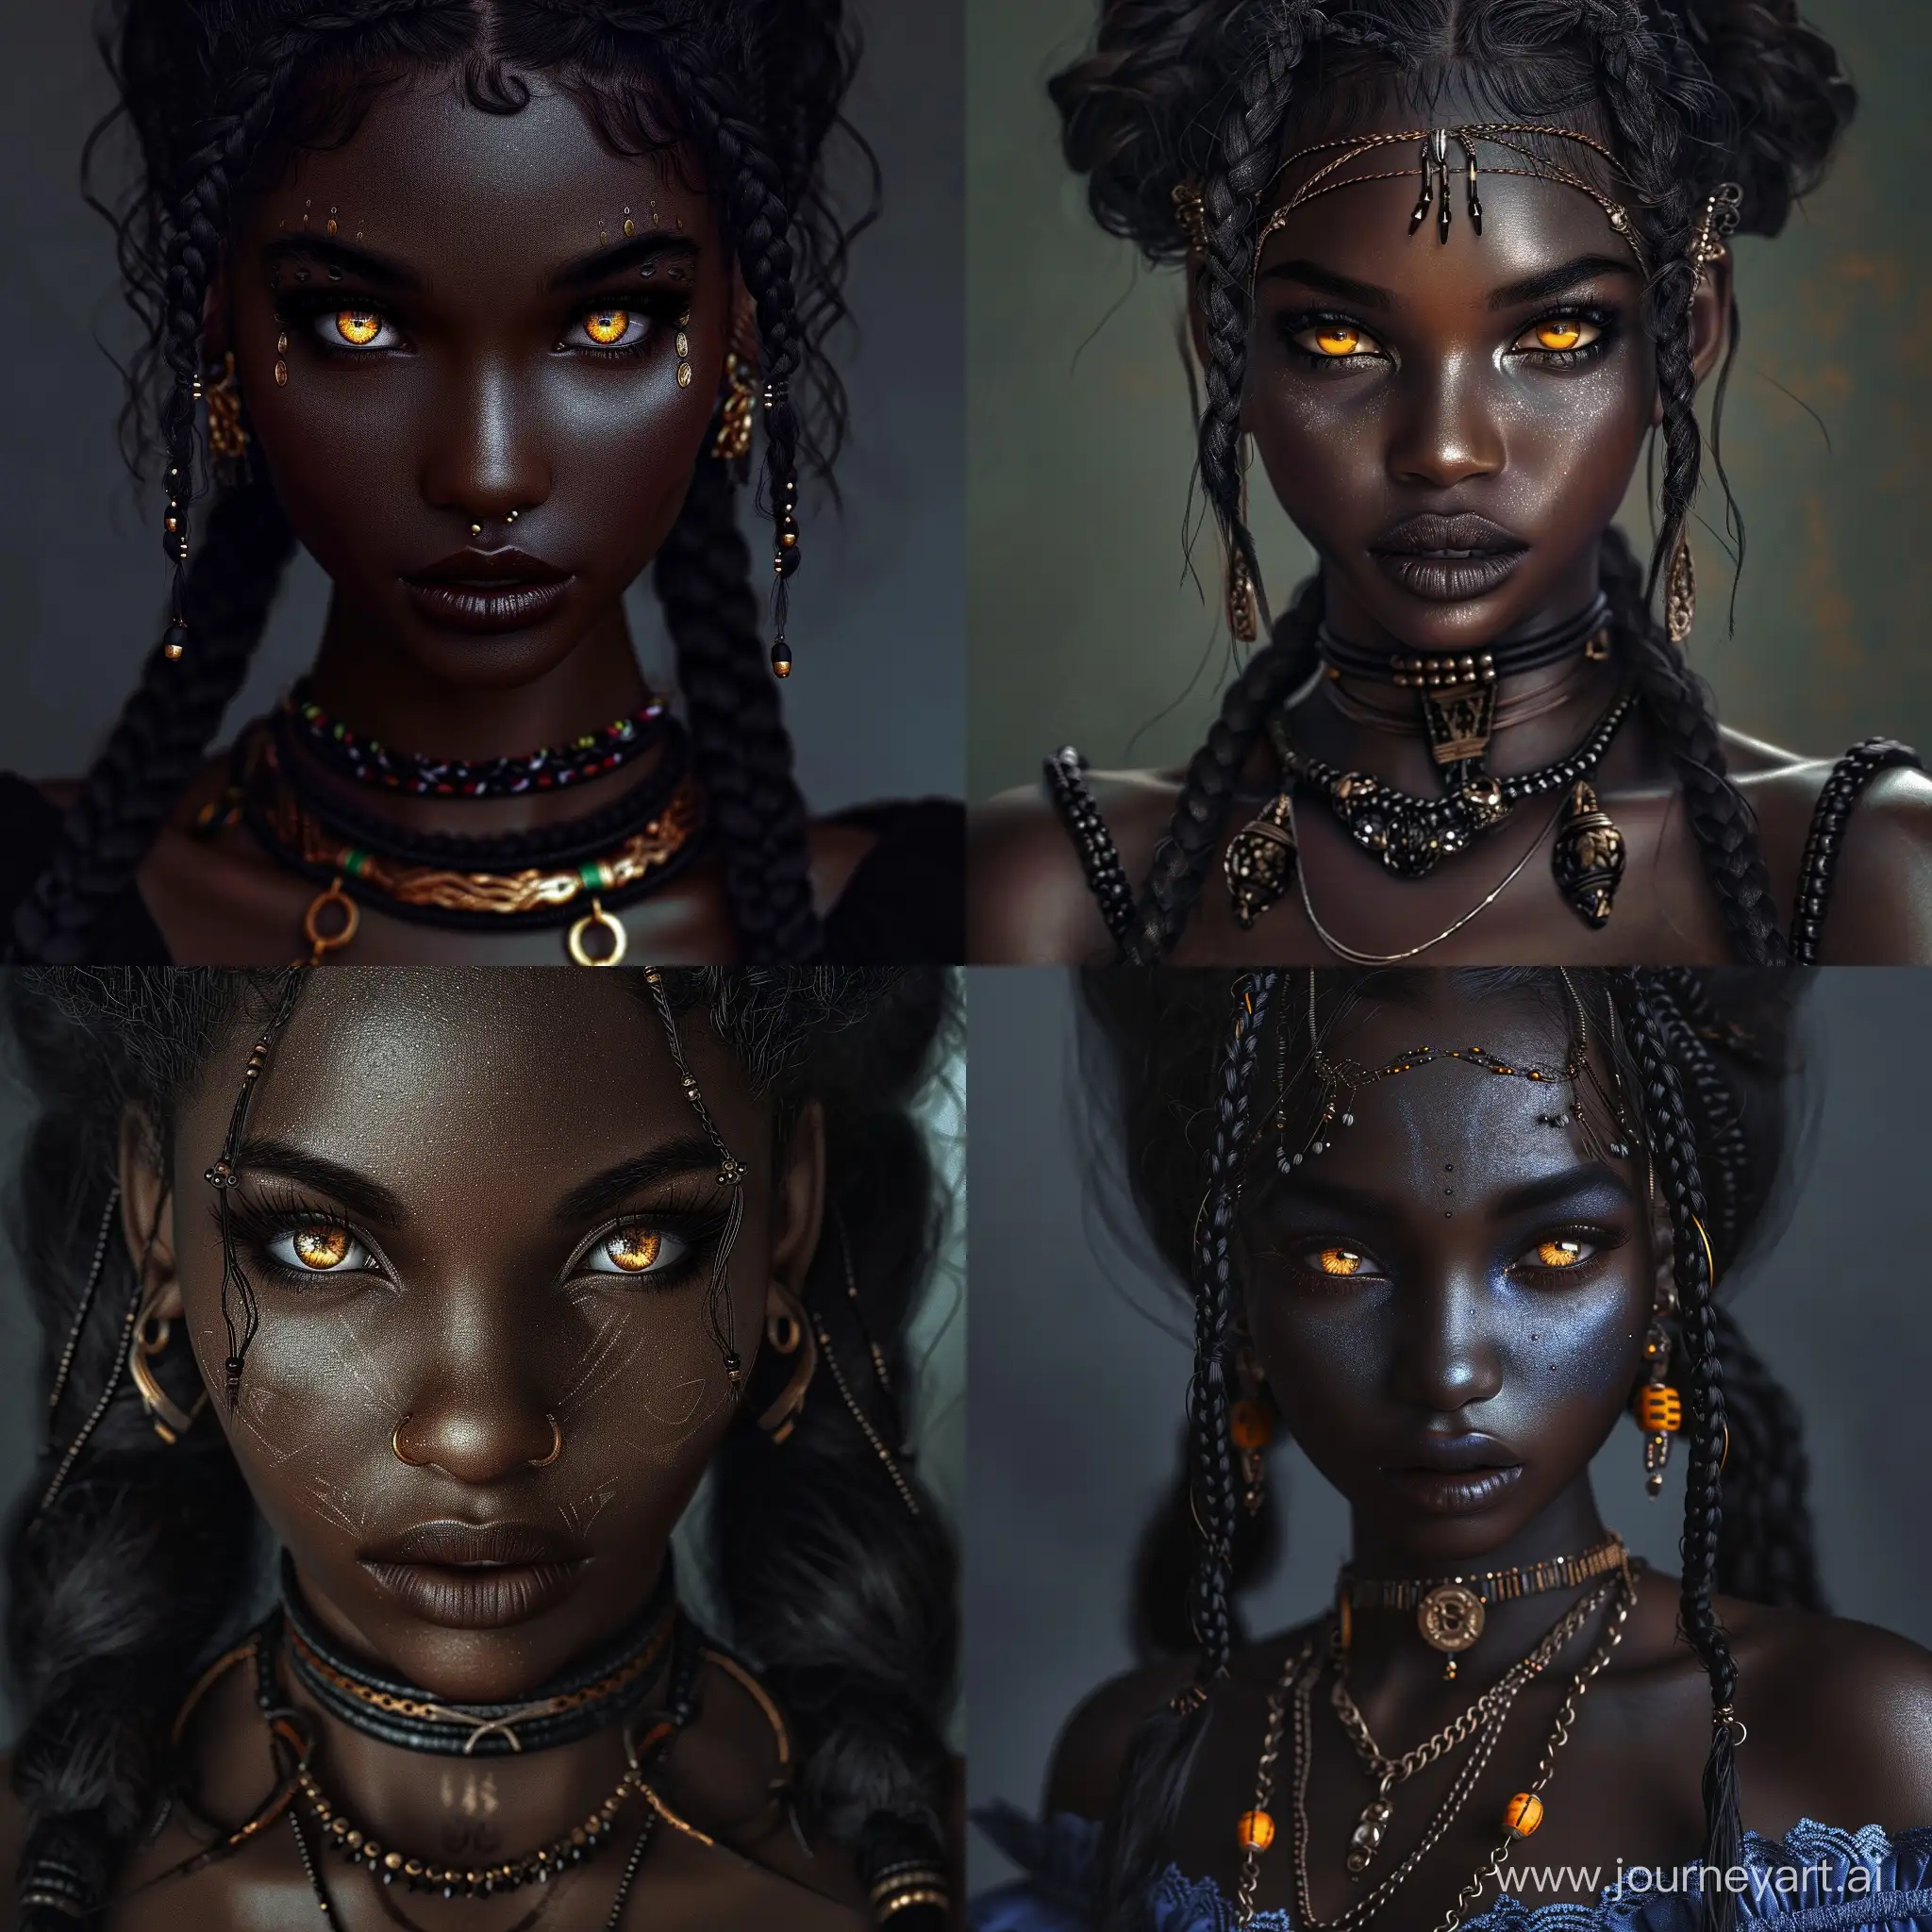 African girl, Africa, dark skin, golden eyes, dark hair, African braids, necklace, earrings, makeup, (detailed skin texture),